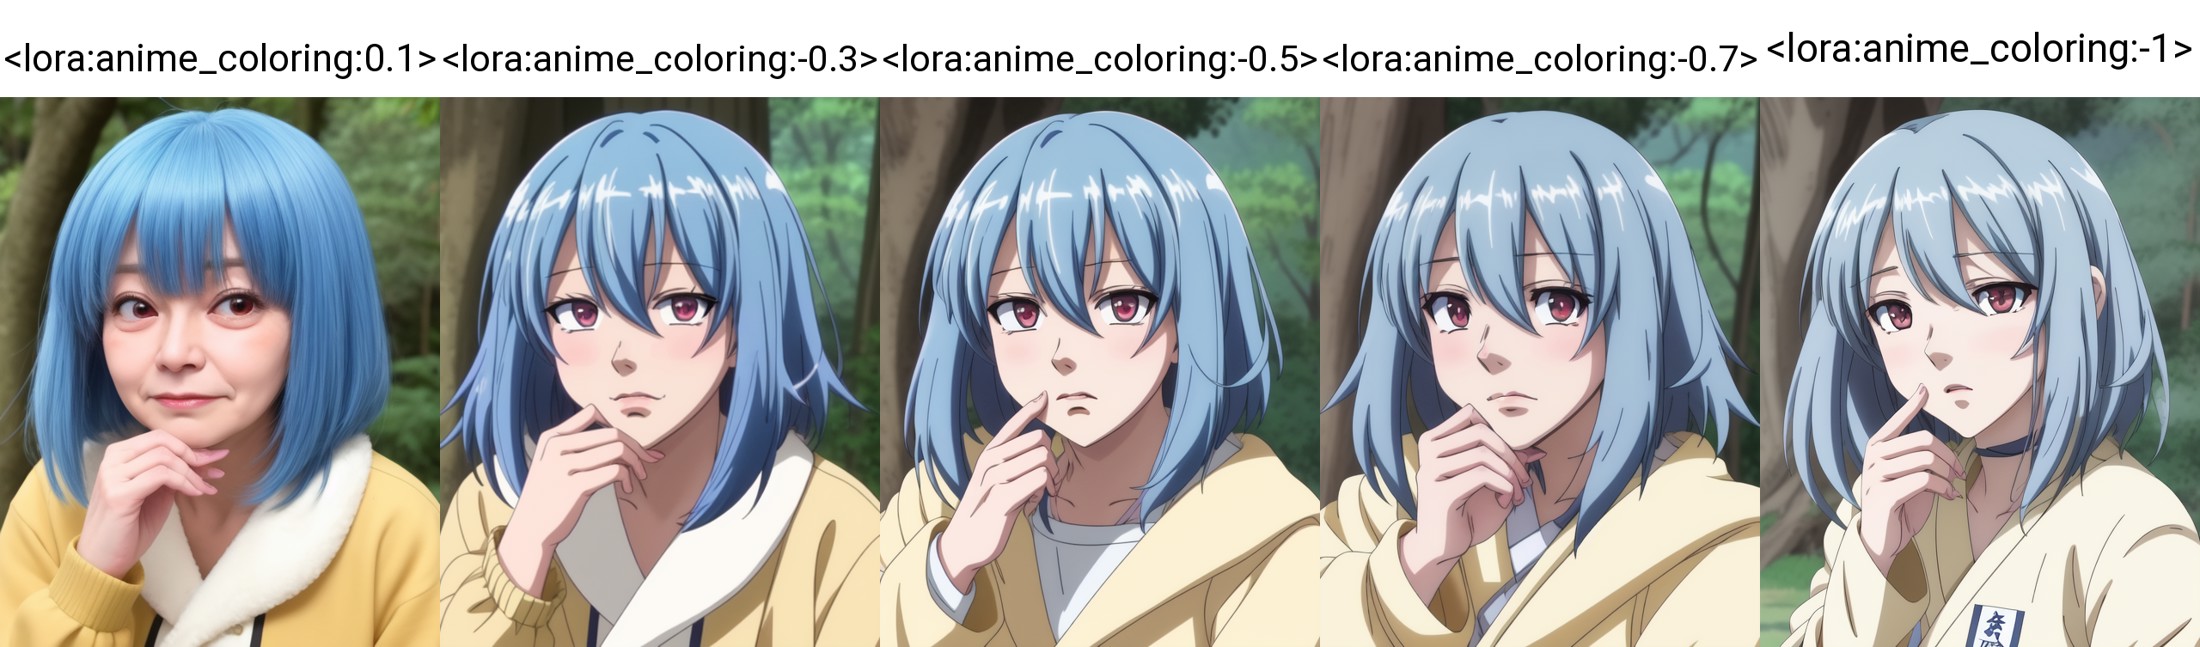 <lora:anime_coloring:0.1>, otoko_no_ko, 96 years old, nasolabial folds, Wrinkle, (anime_coloring:1.1), face focus, blue ha...